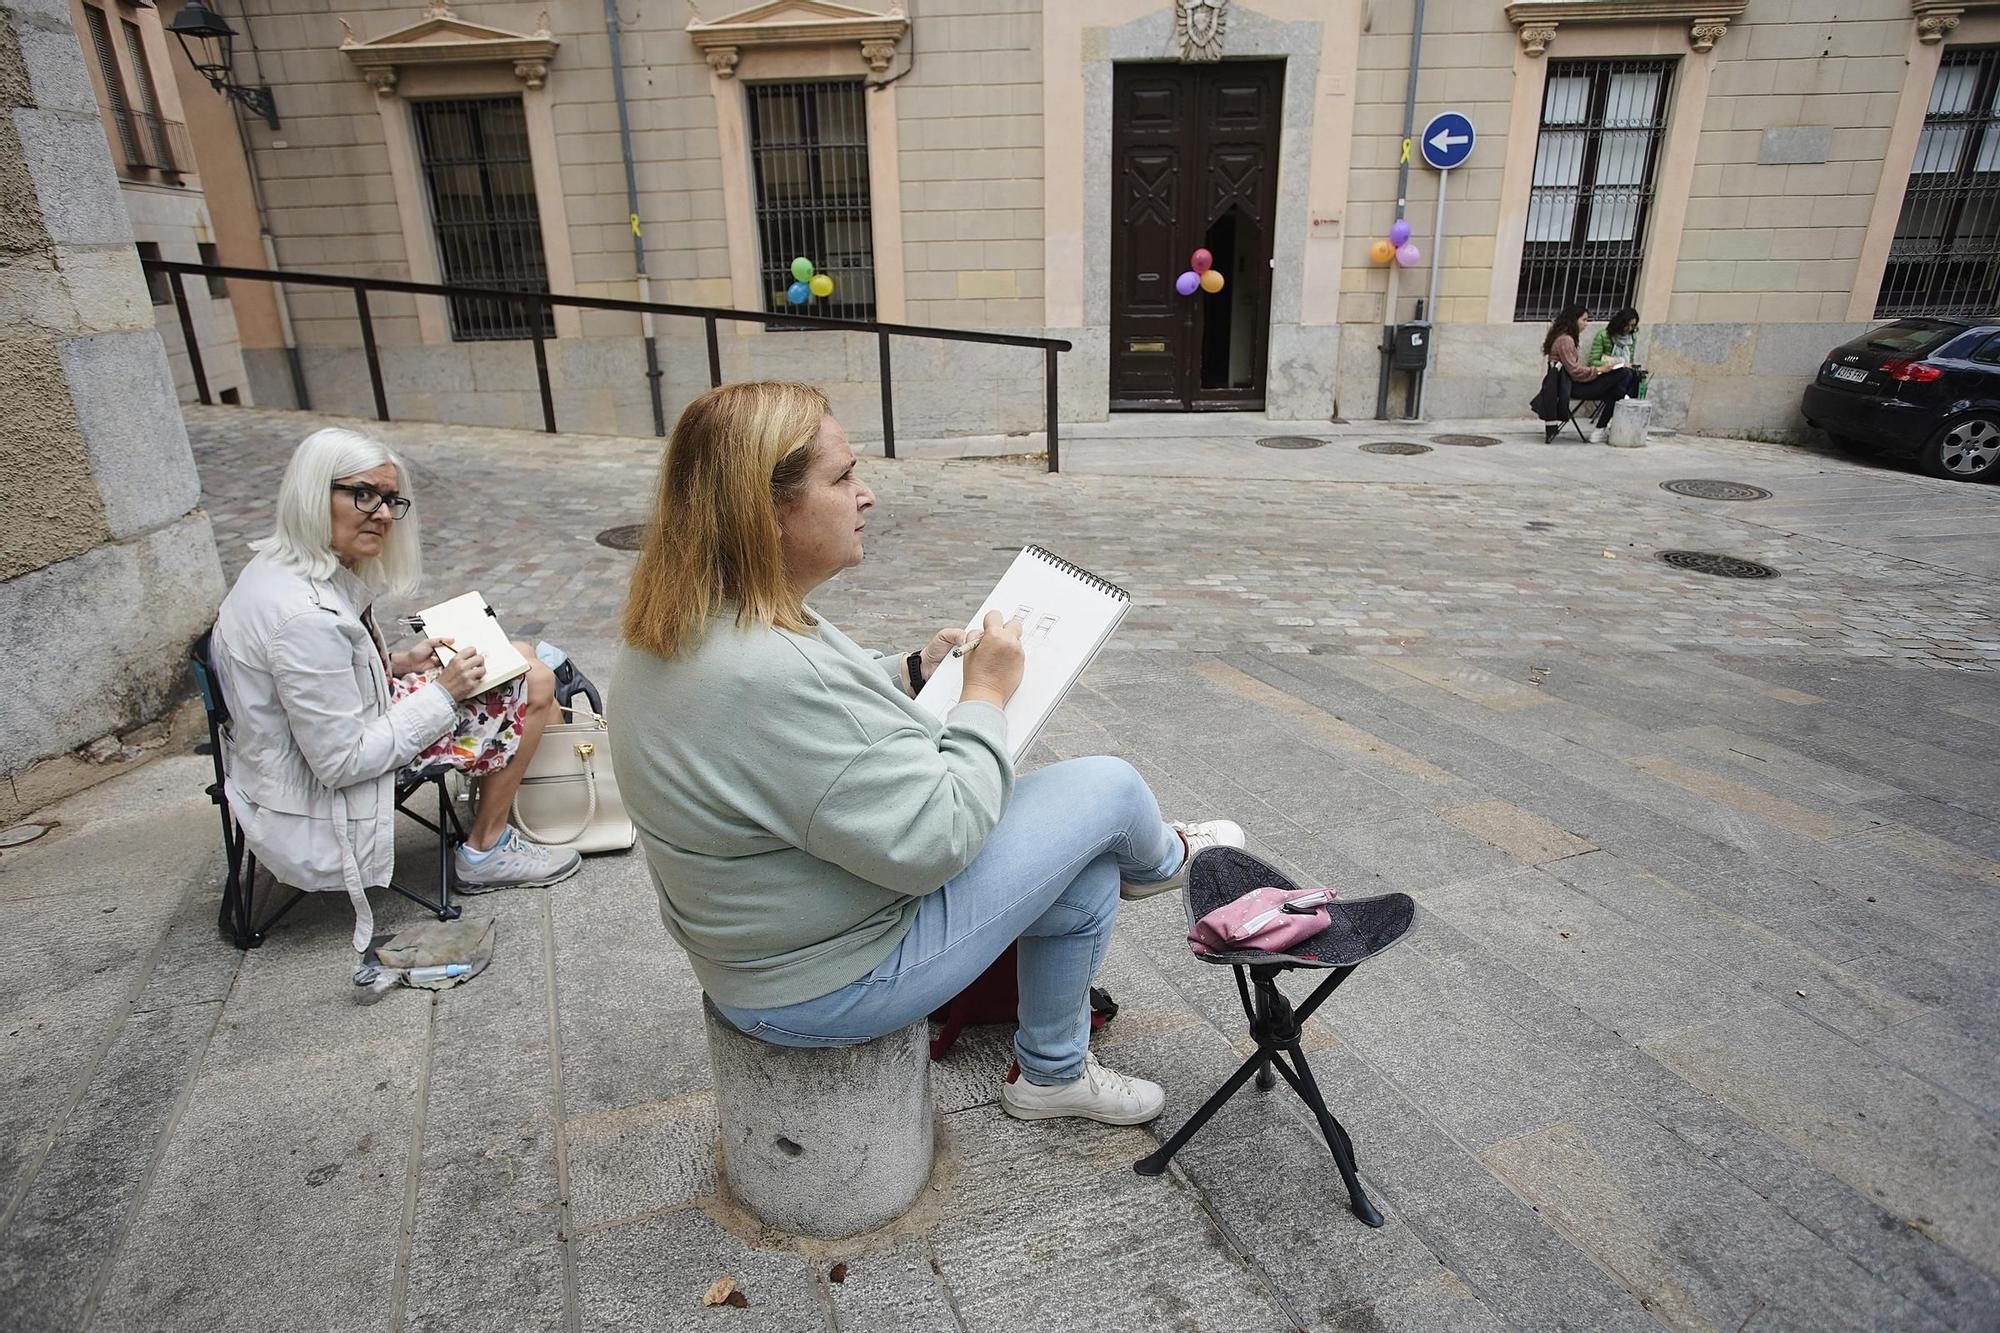 Desena jornada d’Urban Sketchers a Girona